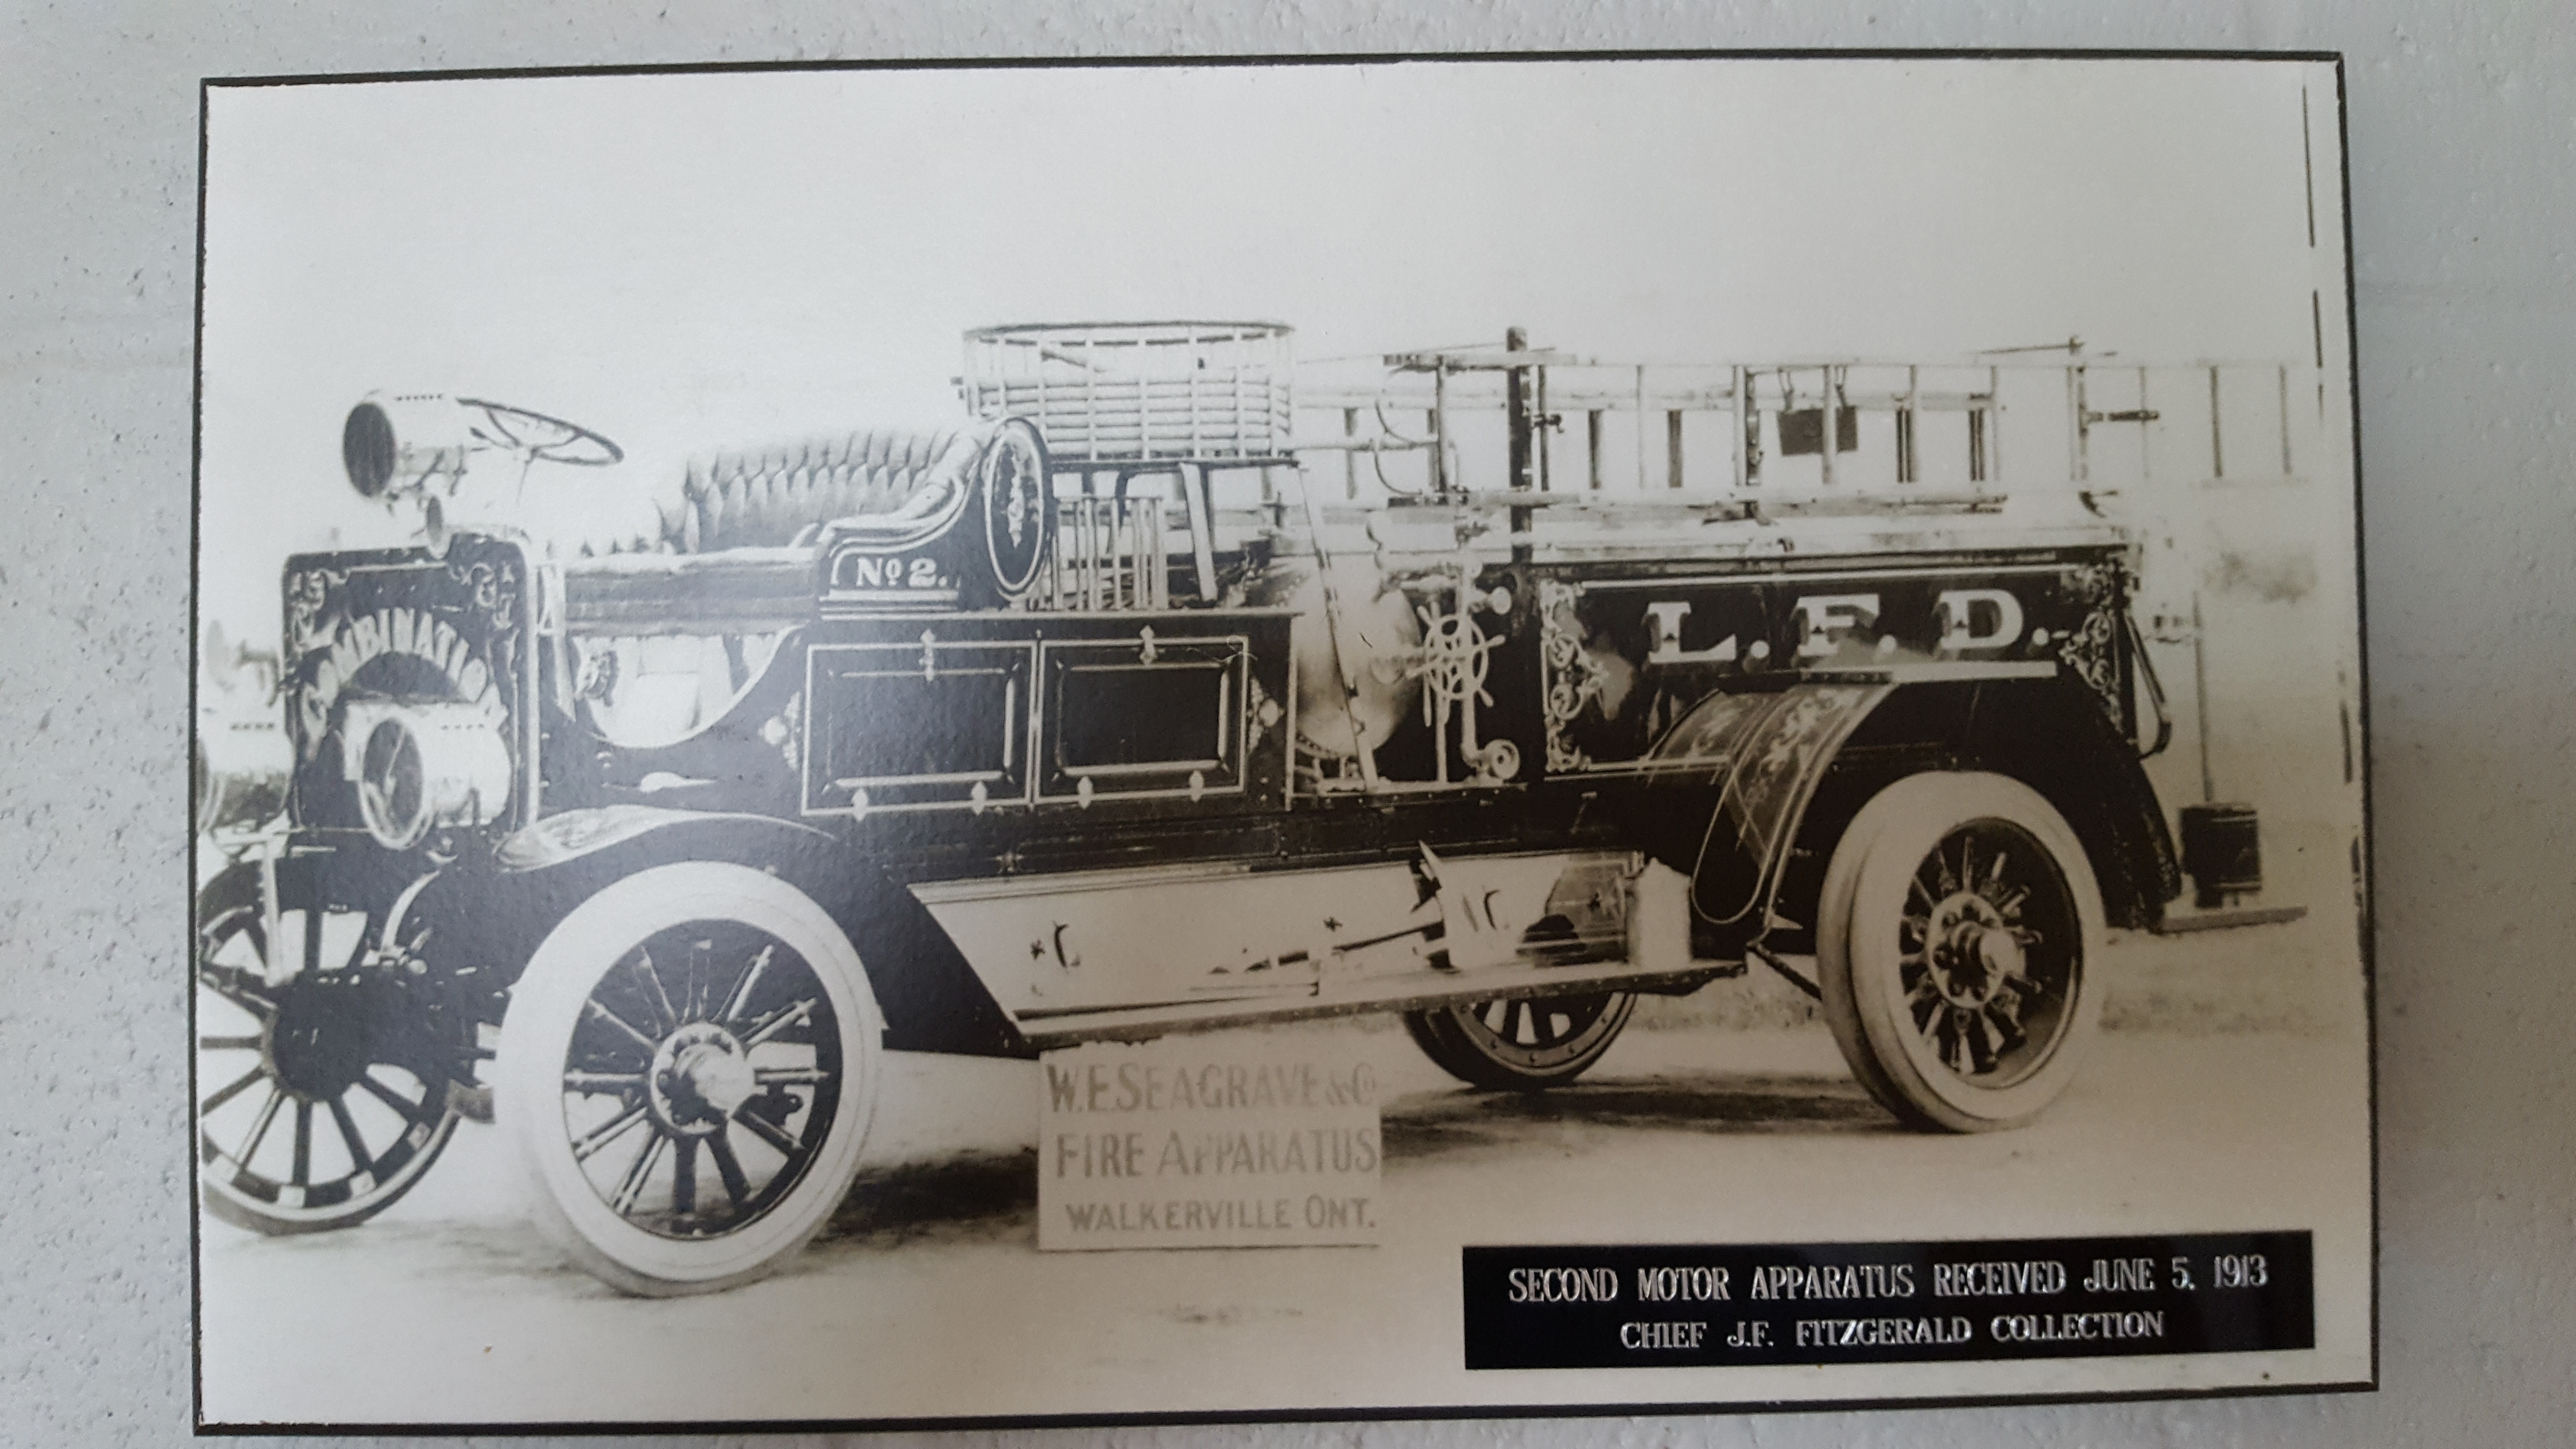 Second motor apparatus received June 5, 1913.